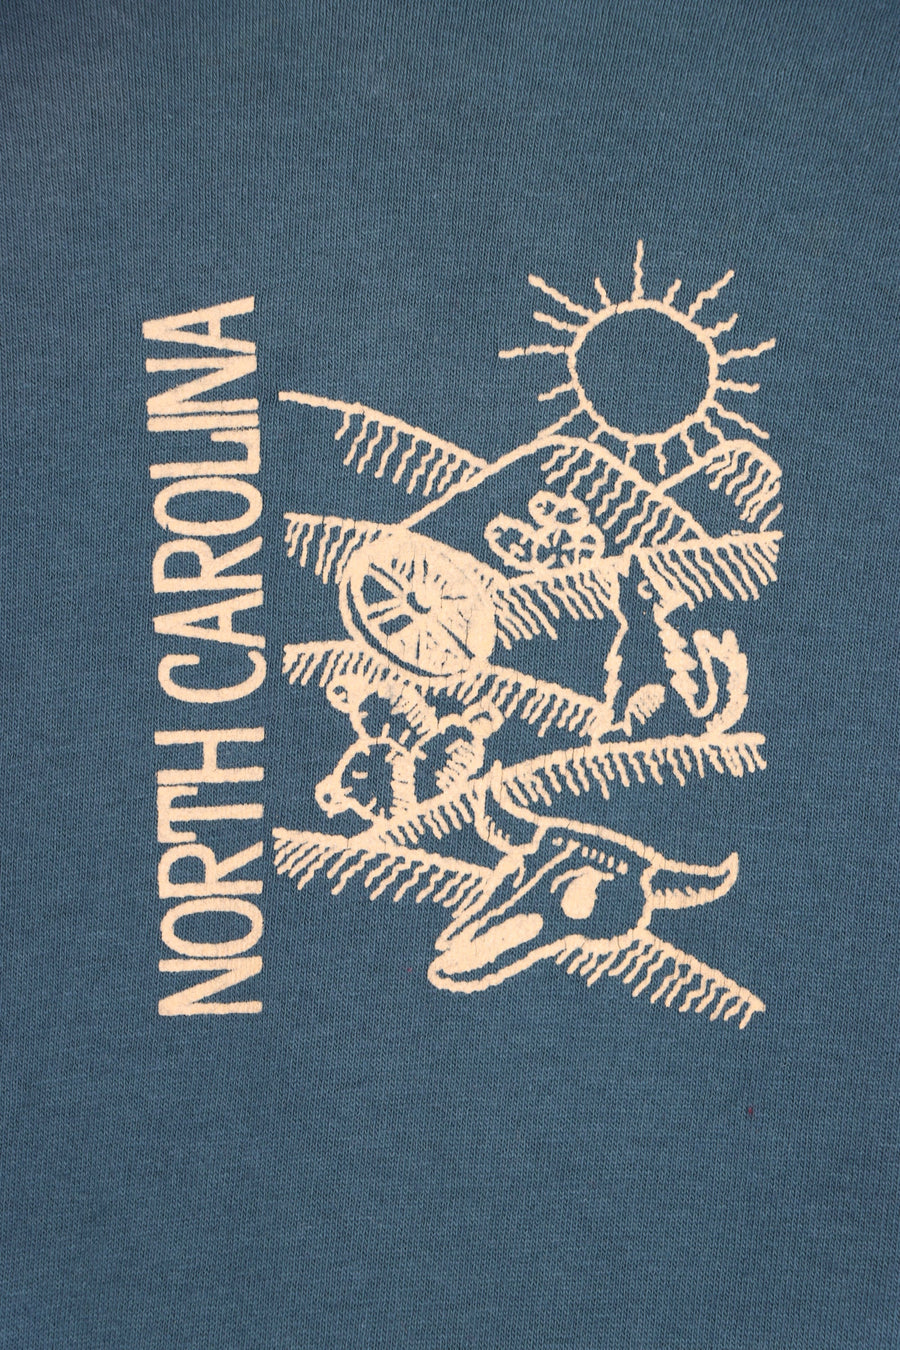 North Carolina Howling Cayotes Texture Print Single Stitch T-Shirt (M) - Vintage Sole Melbourne